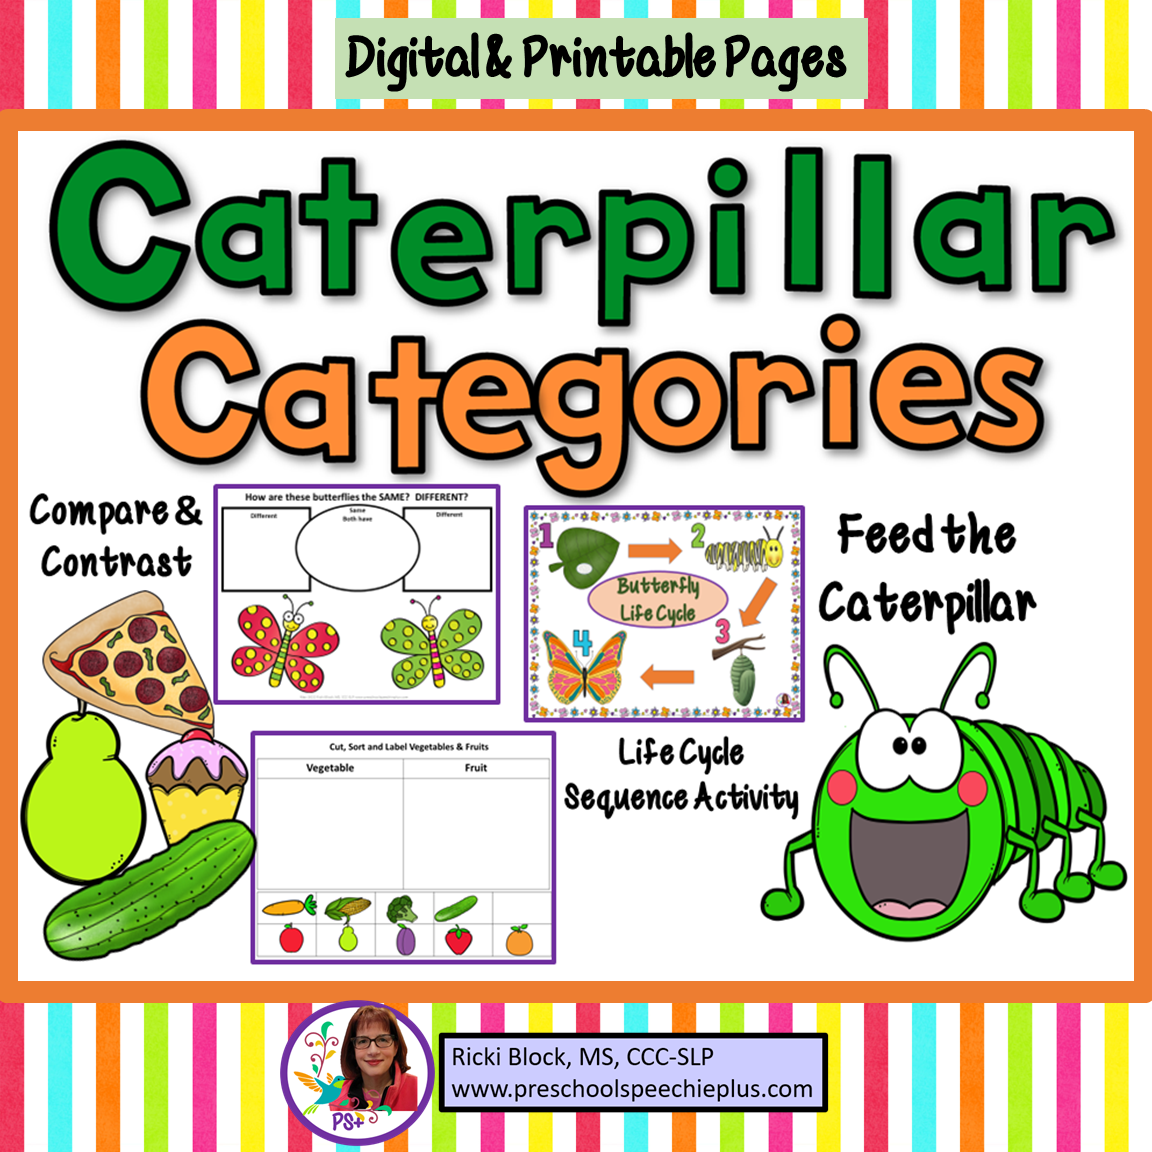 caterpillar cover2.png